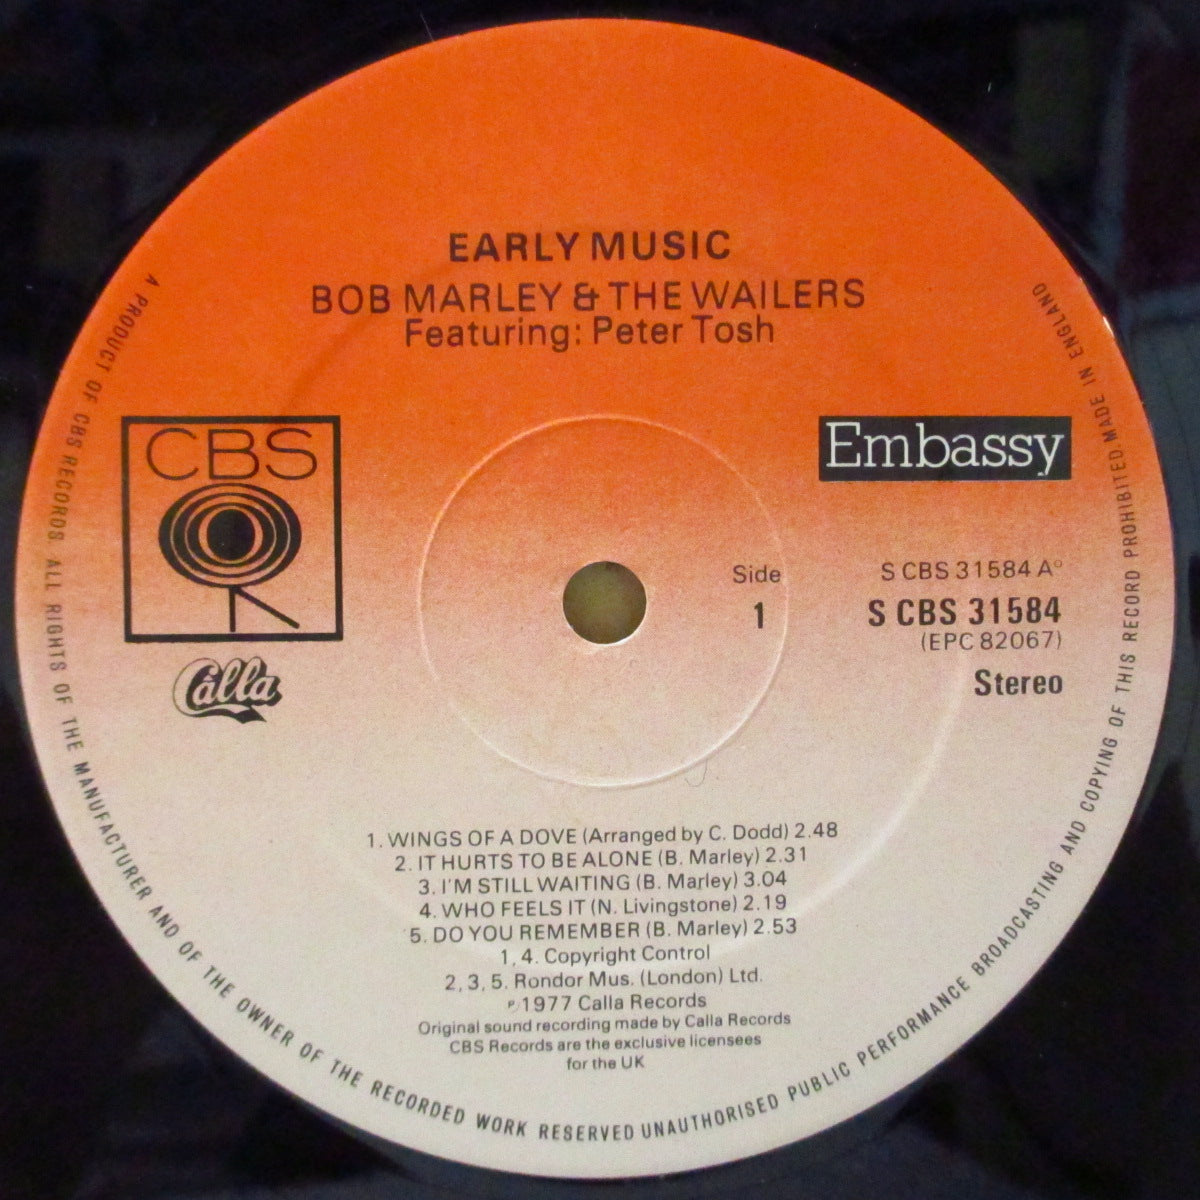 BOB MARLEY u0026 THE WAILERS Featuring PETER TOSH  (ボブ・マーリーu0026ザ・ウェイラーズ・フィーチャリング・ピーター・トッシュ) - Early Music (UK オリジナル LP)